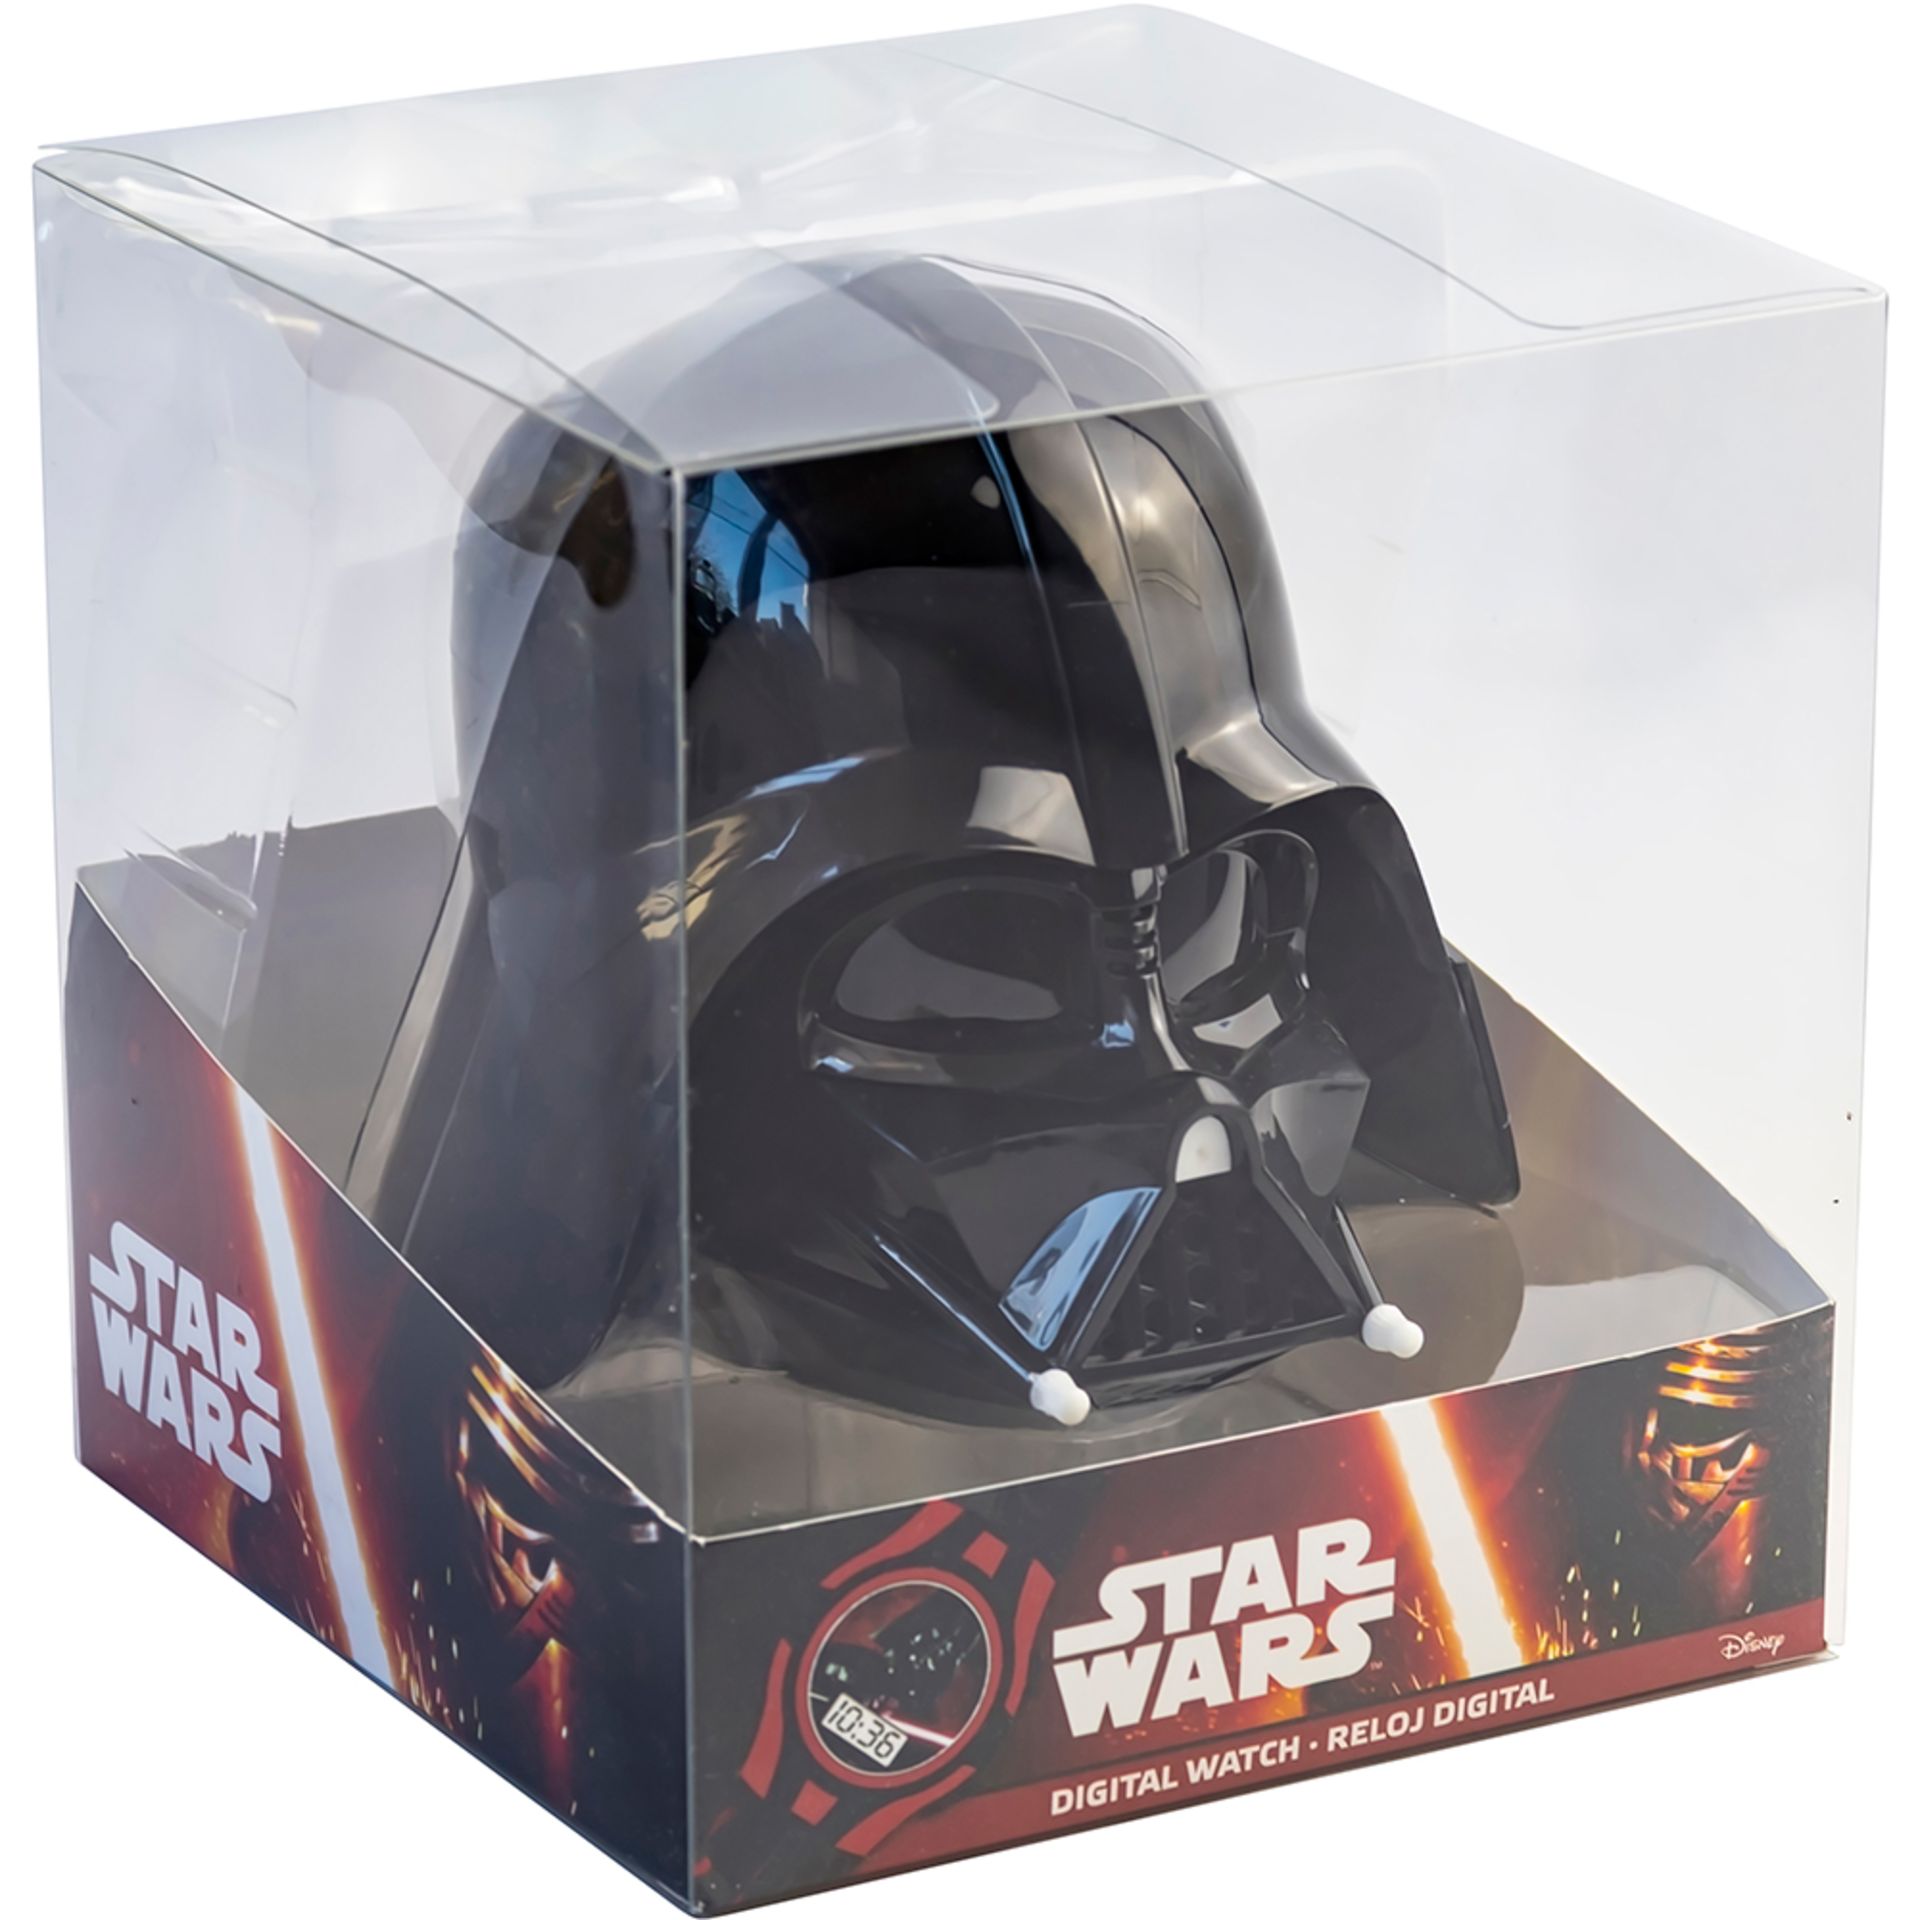 + VAT Brand New Star Wars Darth Vader Watch In 3D Case - ISP £42.63 (Ebay)